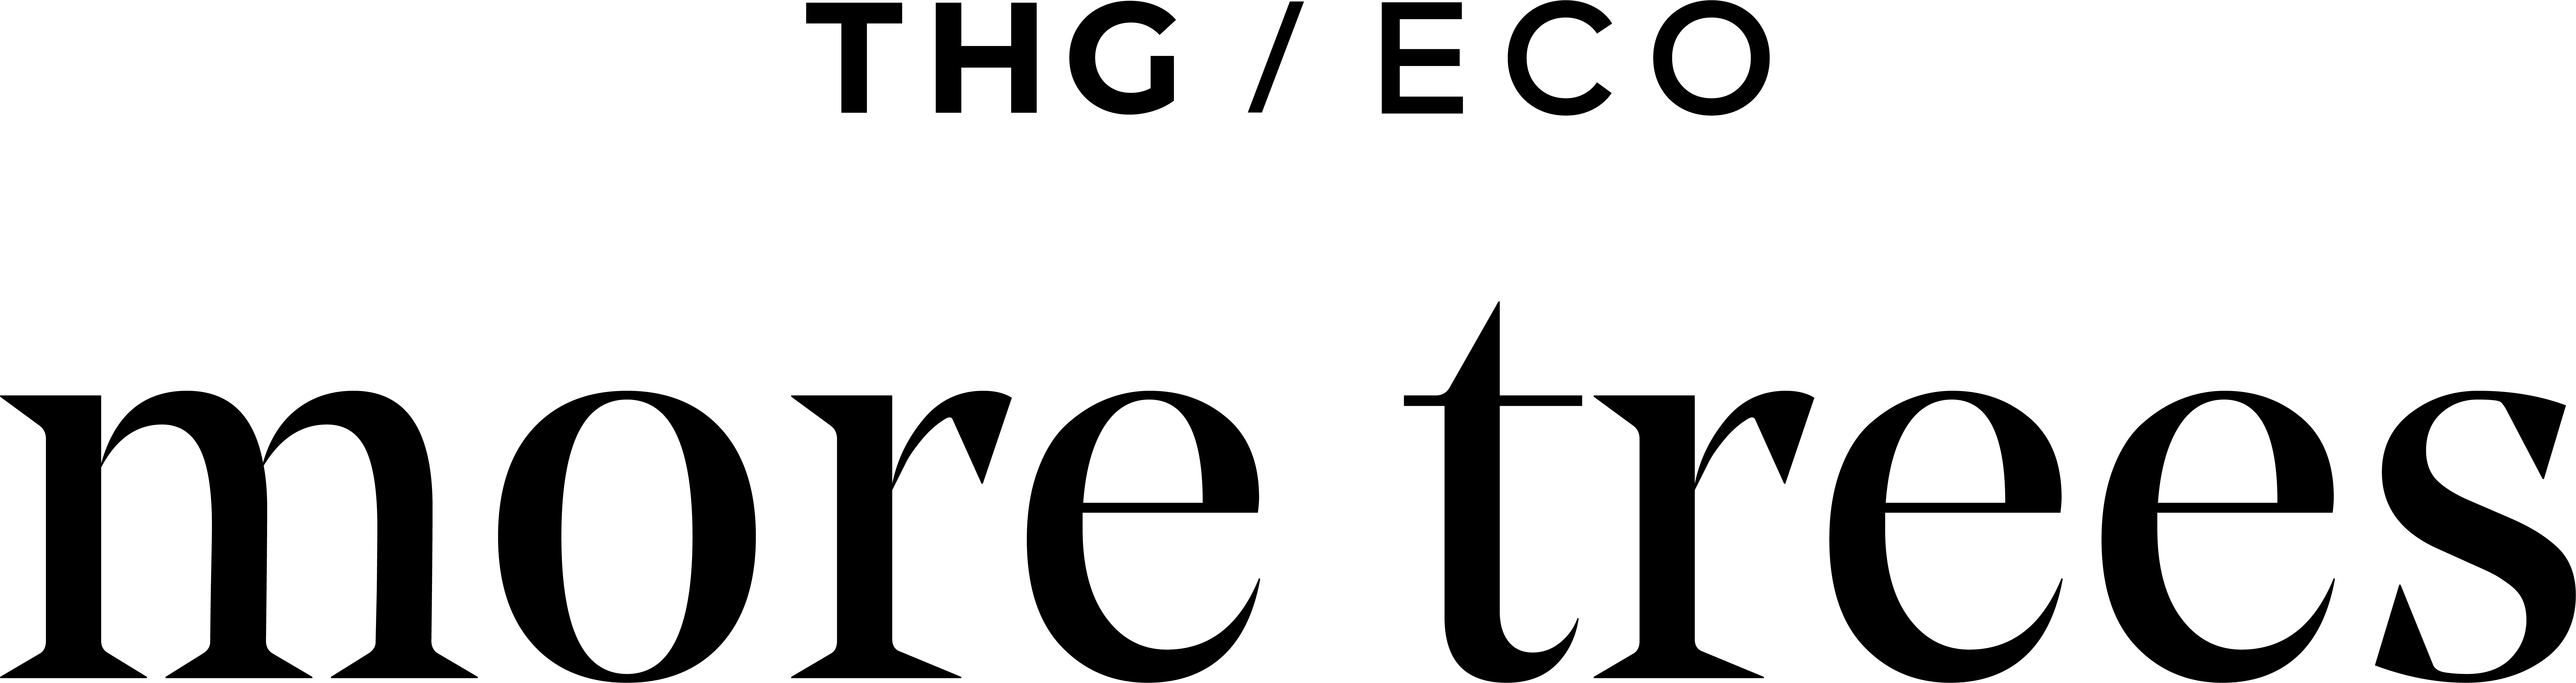 MoreTrees Logo